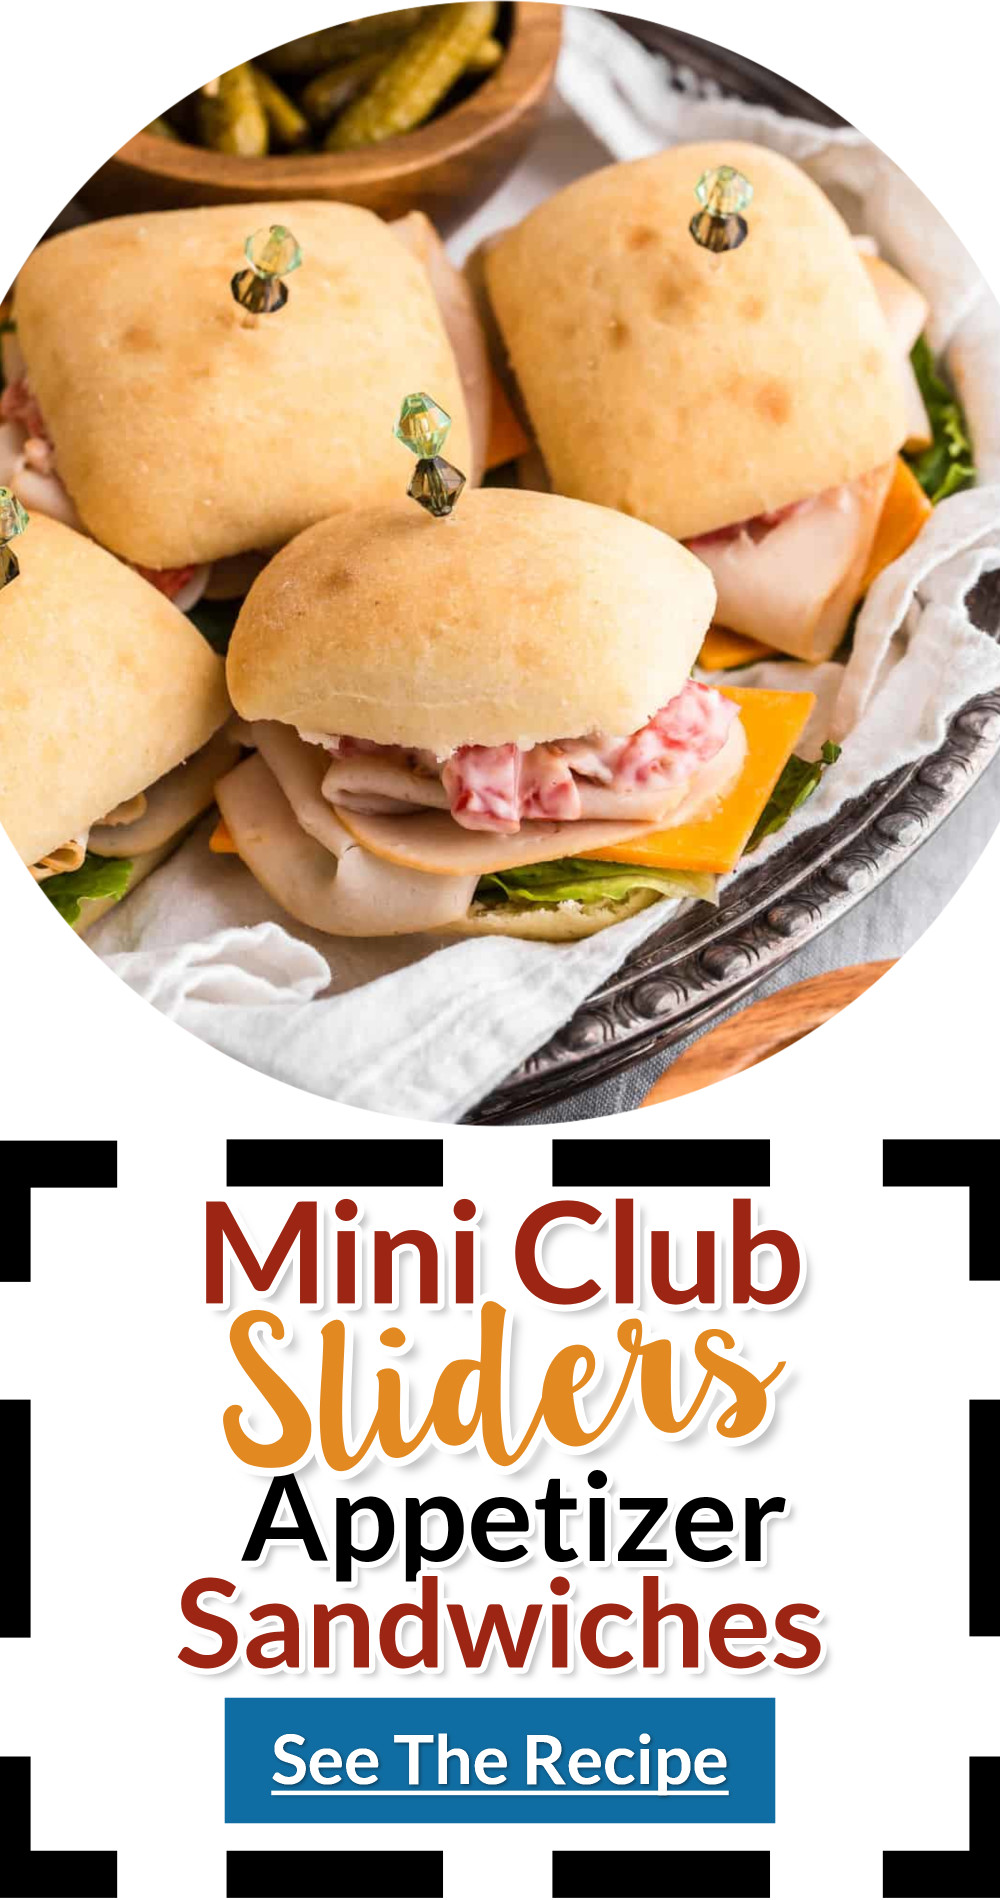 Mini Club Sliders Appetizer Sandwiches Recipe